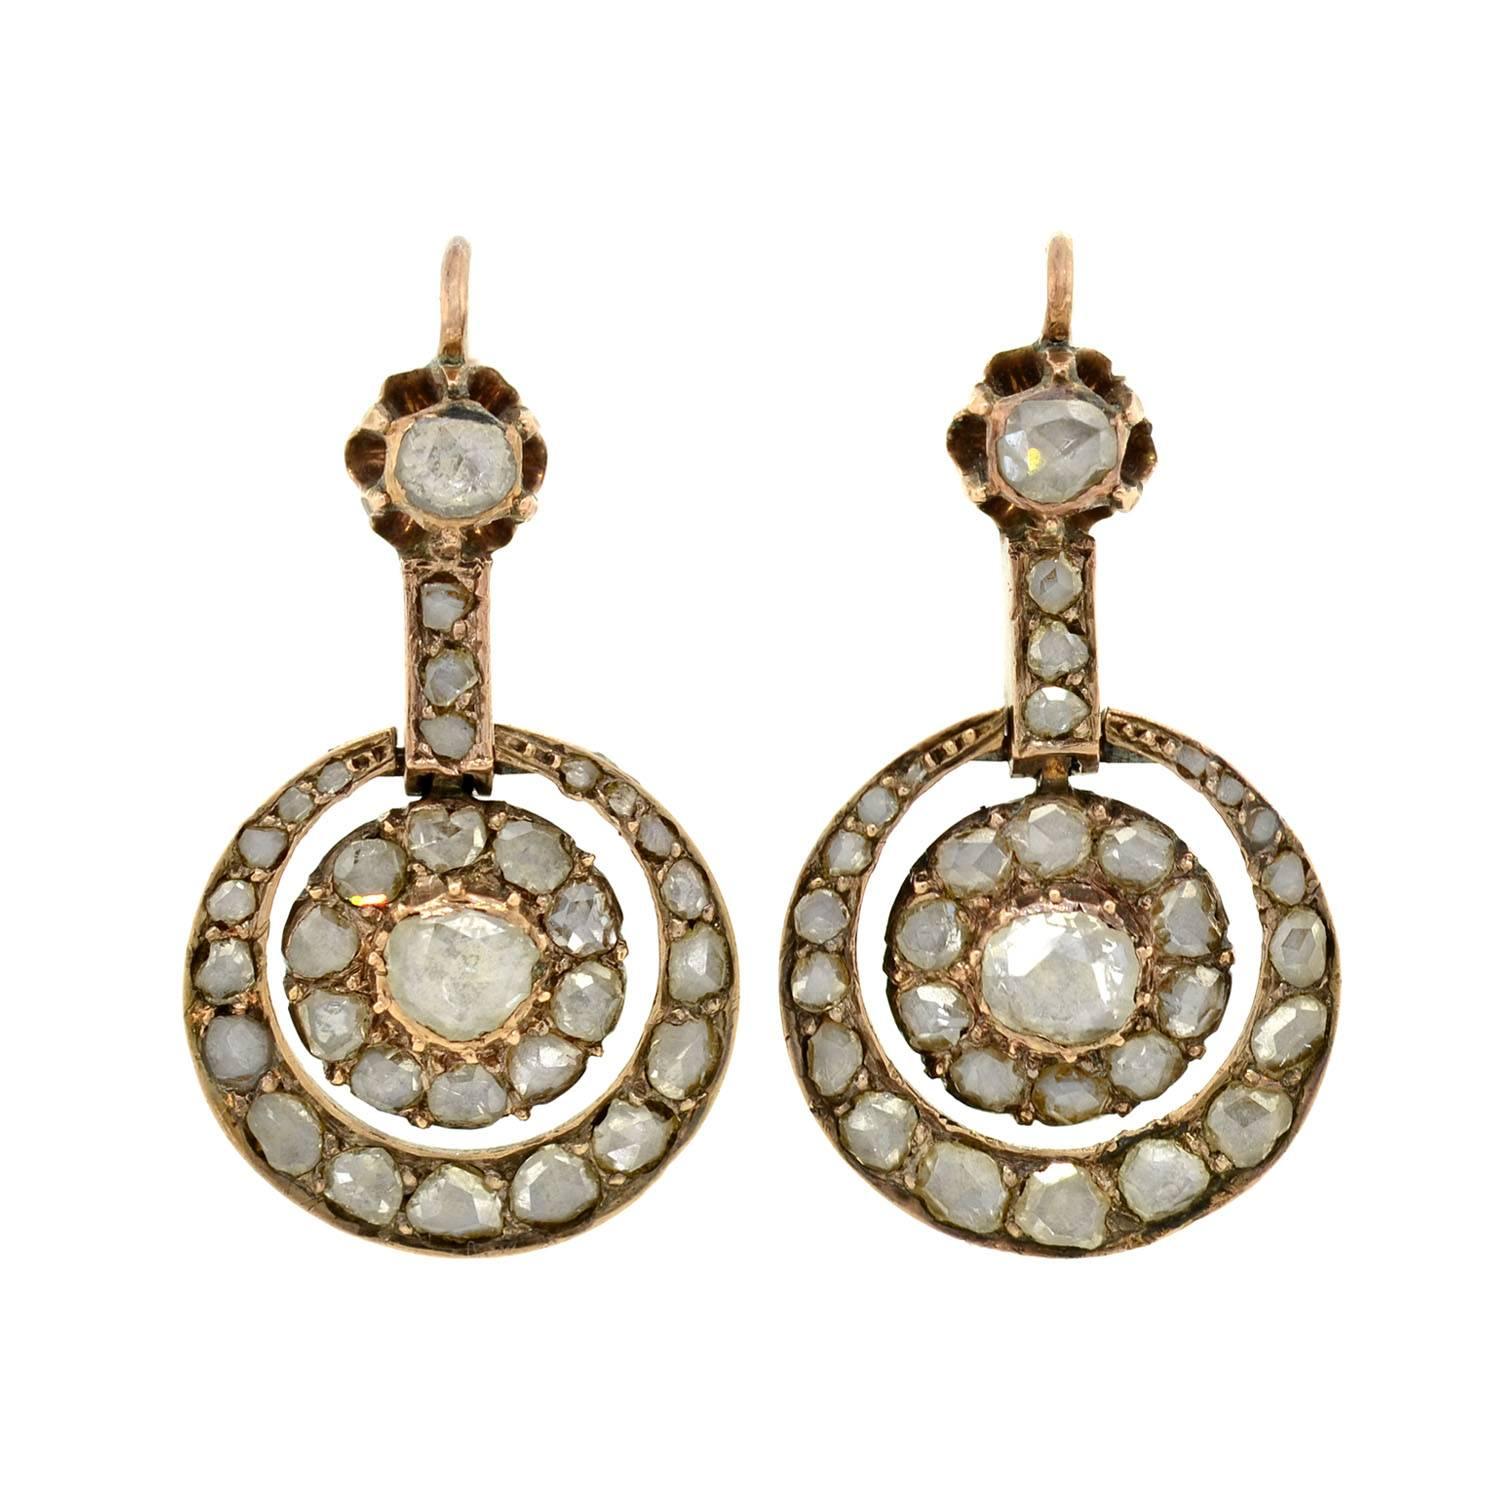 Early Victorian Rose Cut Diamond Gold Earrings